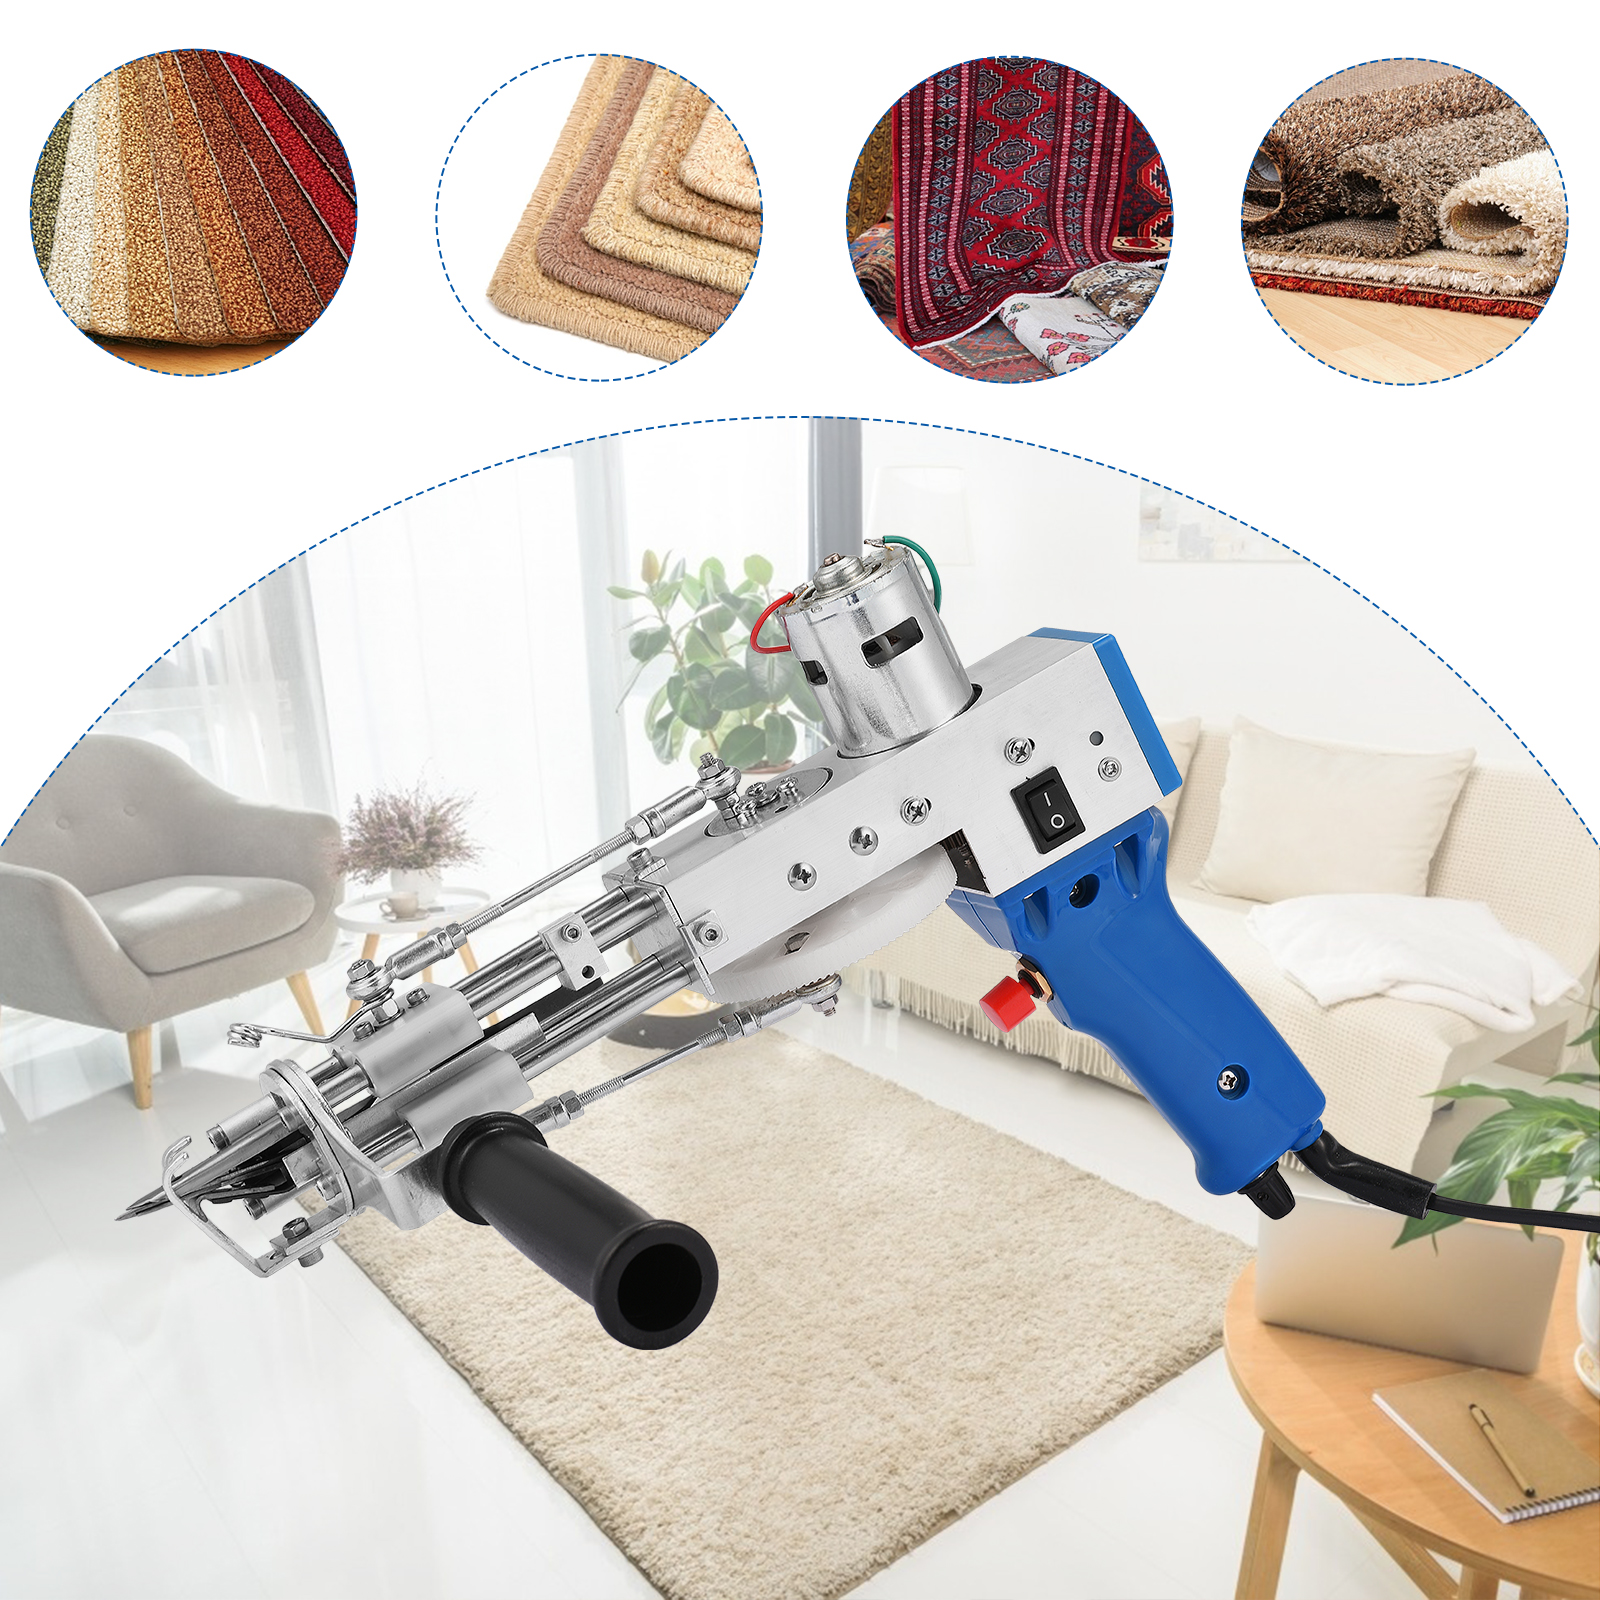 2 In 1 Tufting Gun Can Do Cut Pile And Loop Pile Electric Carpet Rug Guns, Carpet Weaving Knitting Machine With 5-40 Stitches resin heat gun